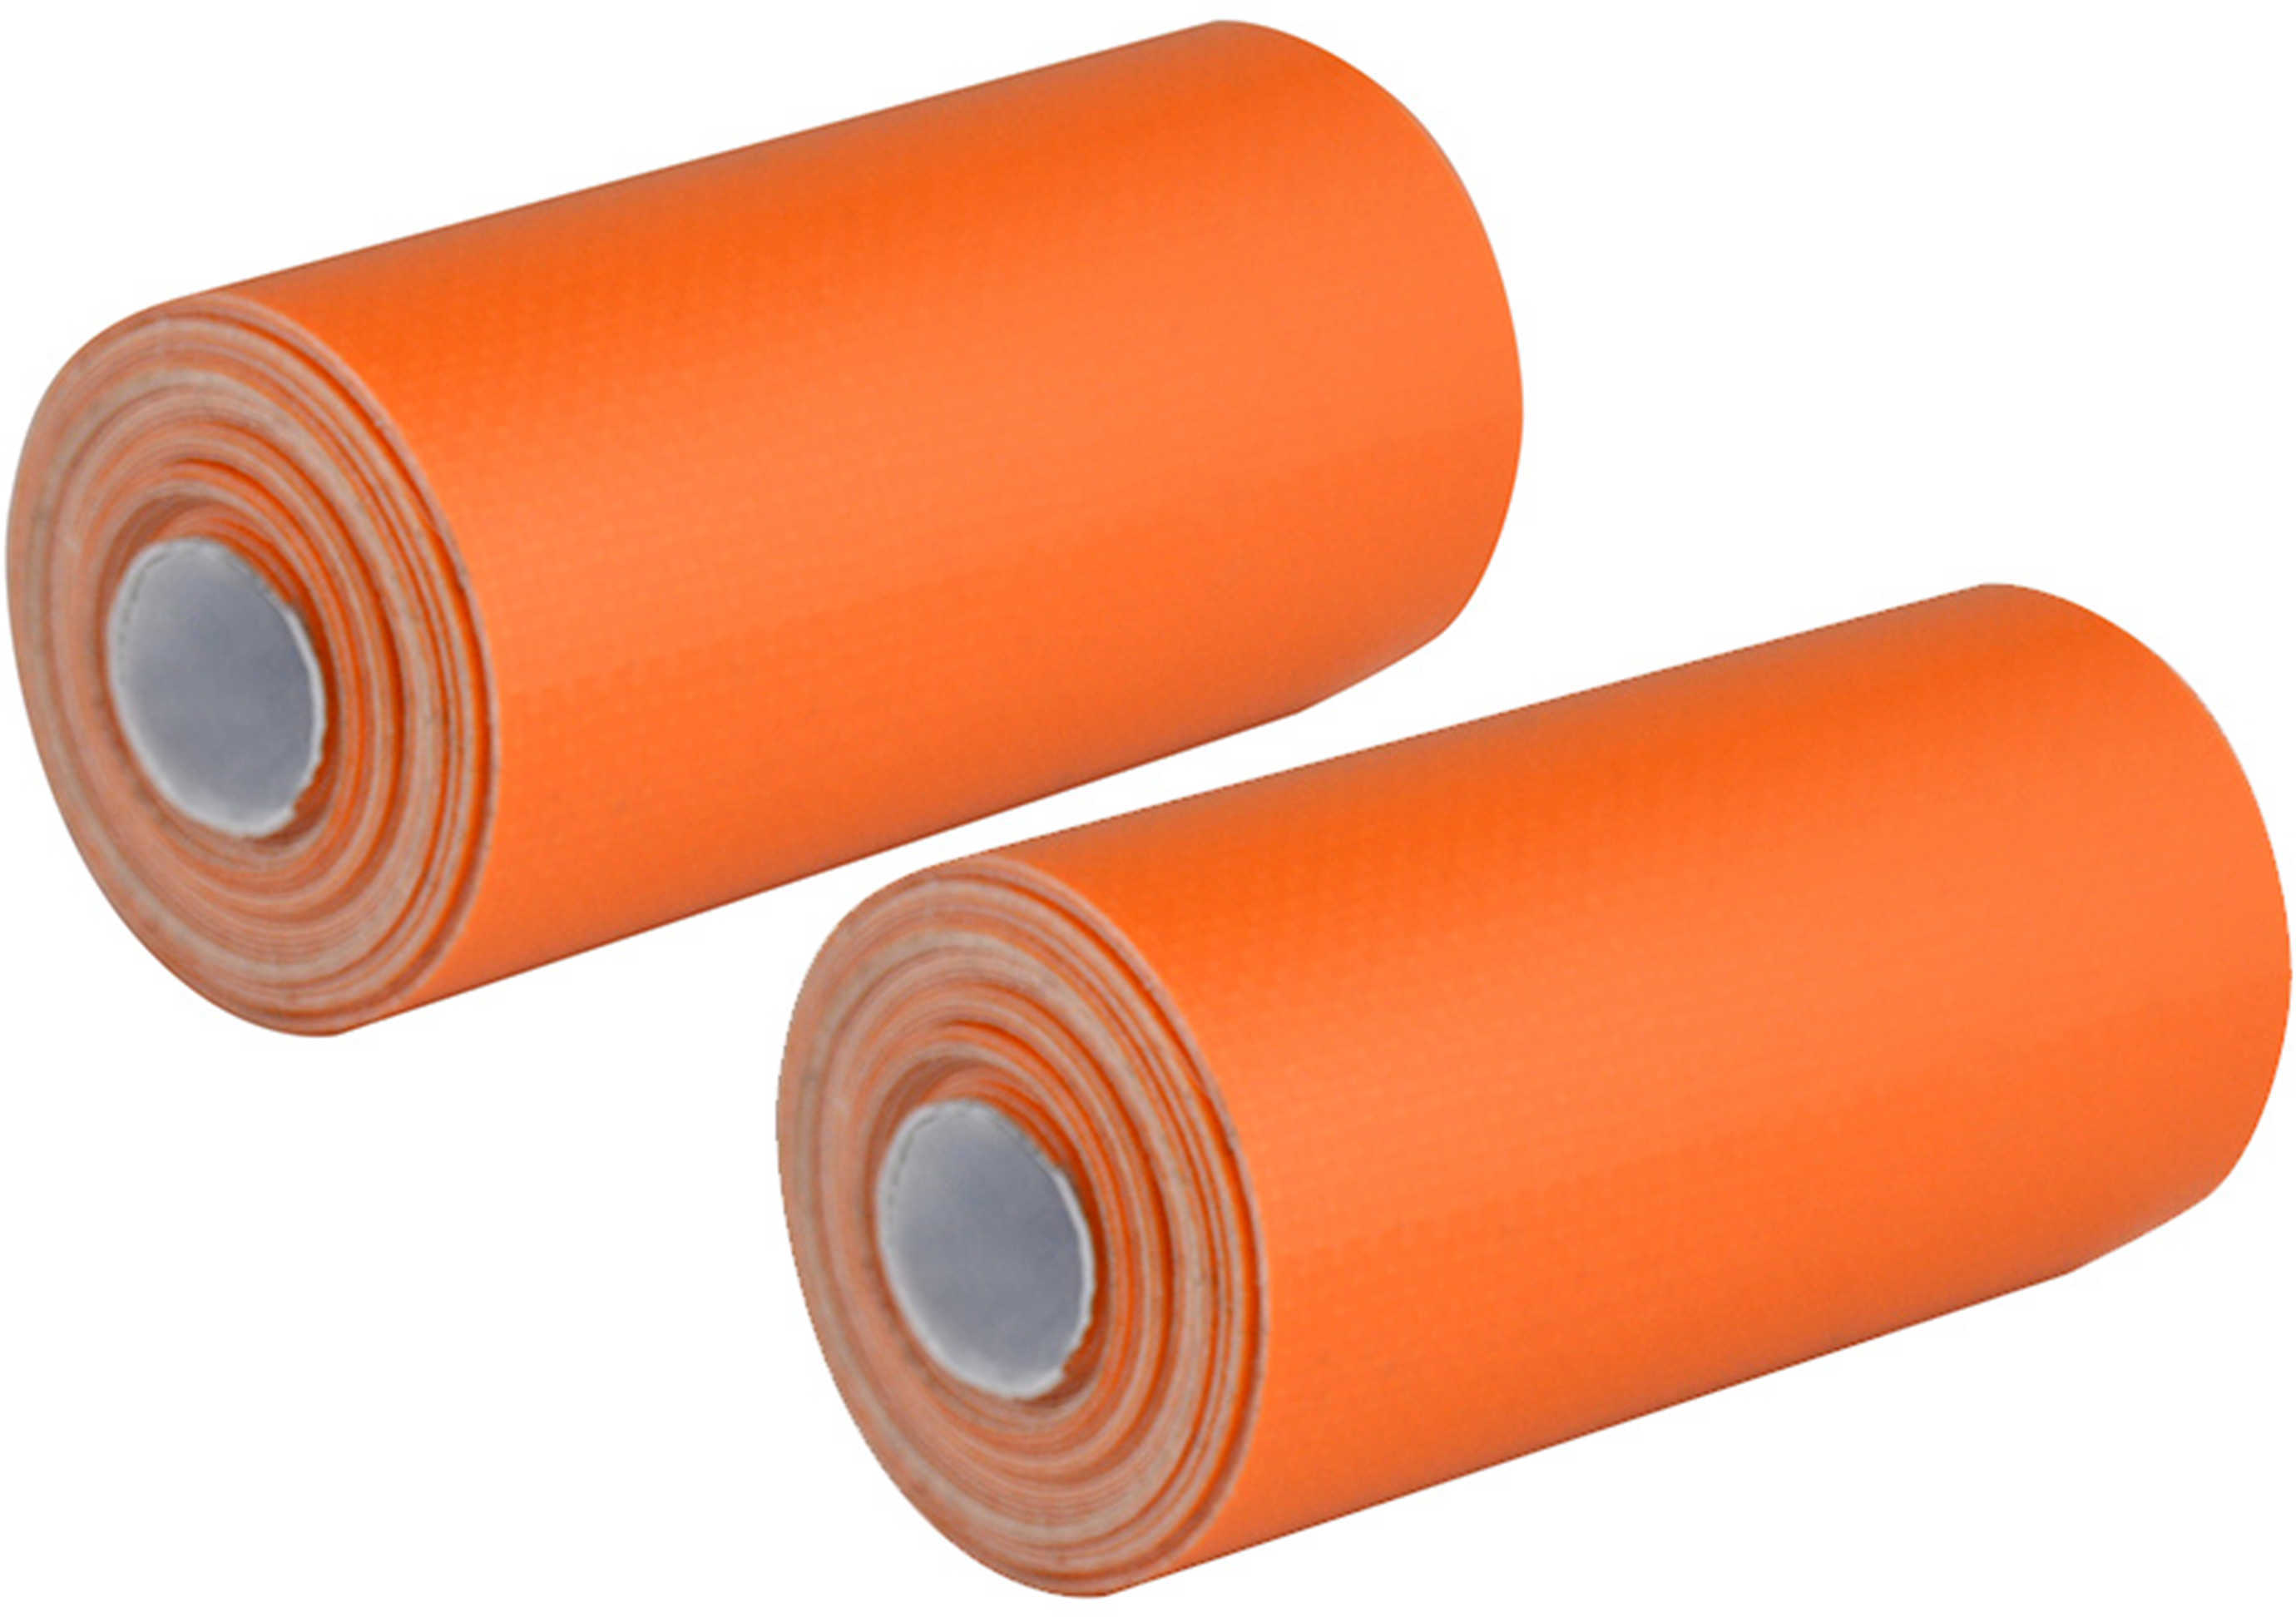 Ultimate Survival Technologies Duct Tape Orange, 2 Pack Md: 20-STL0001-08